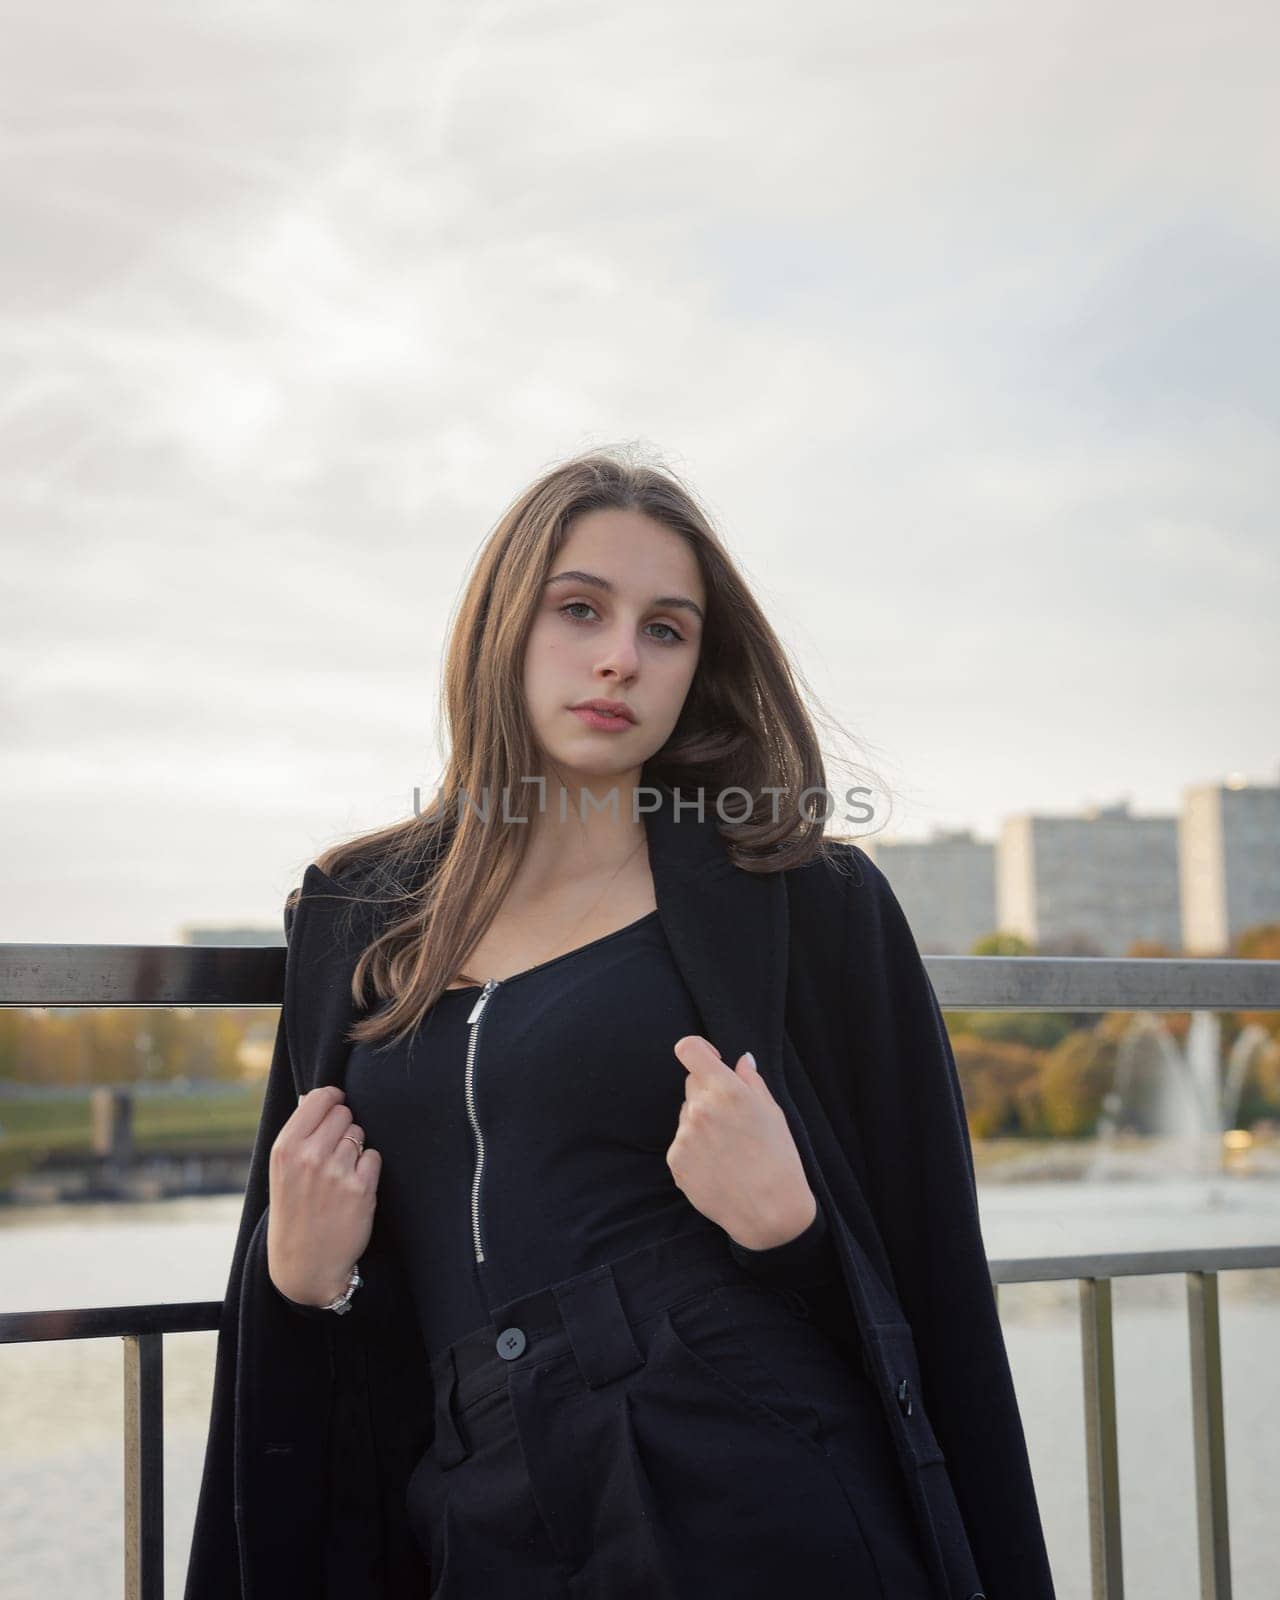 Portrait of a girl on a bridge near a pond in a city park. by Yurich32